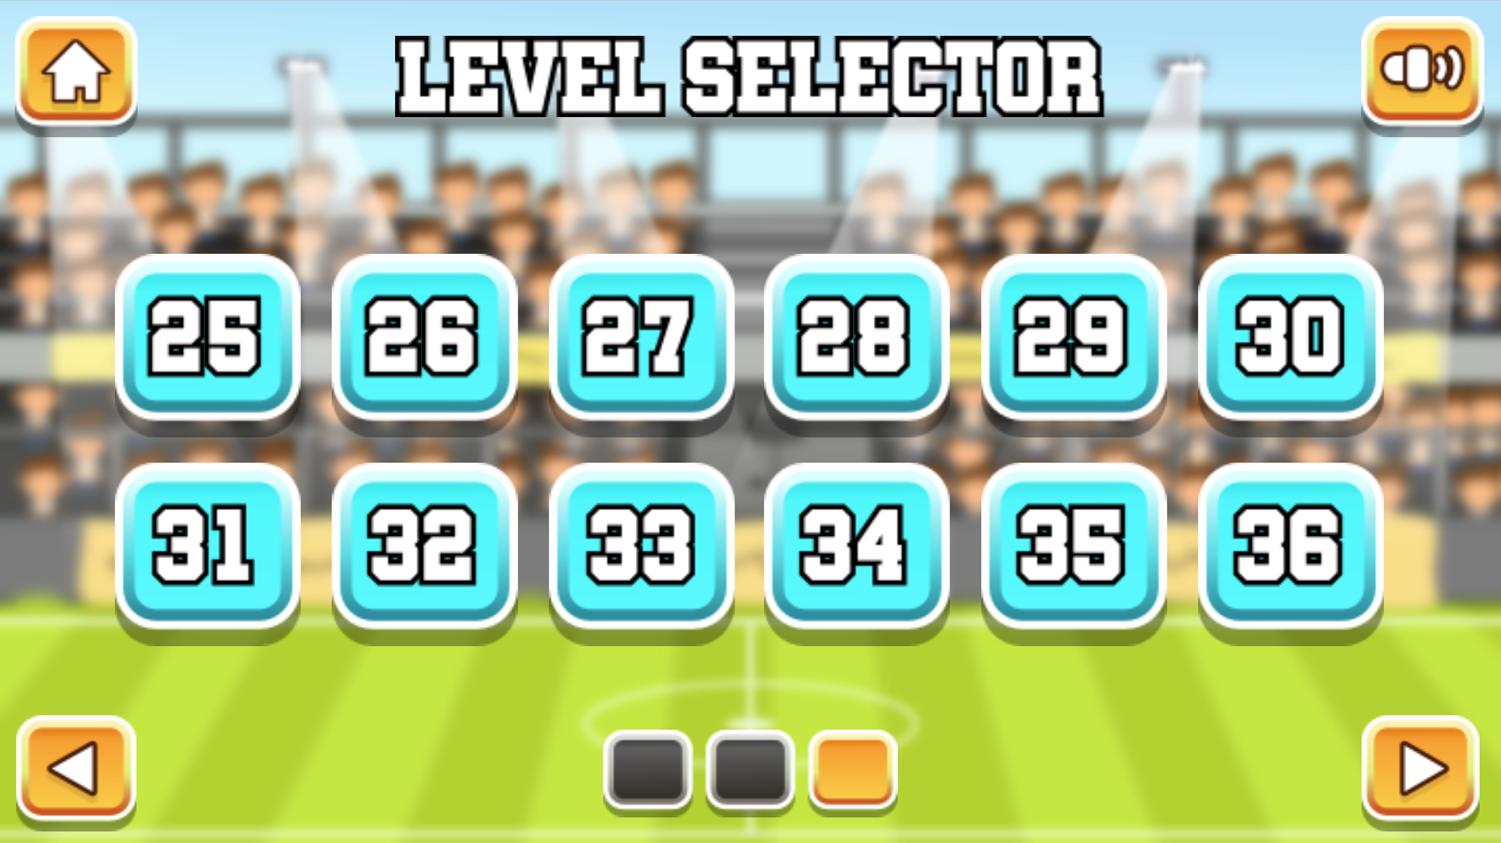 Rotate Soccer Game Level Select Screen Screenshot.